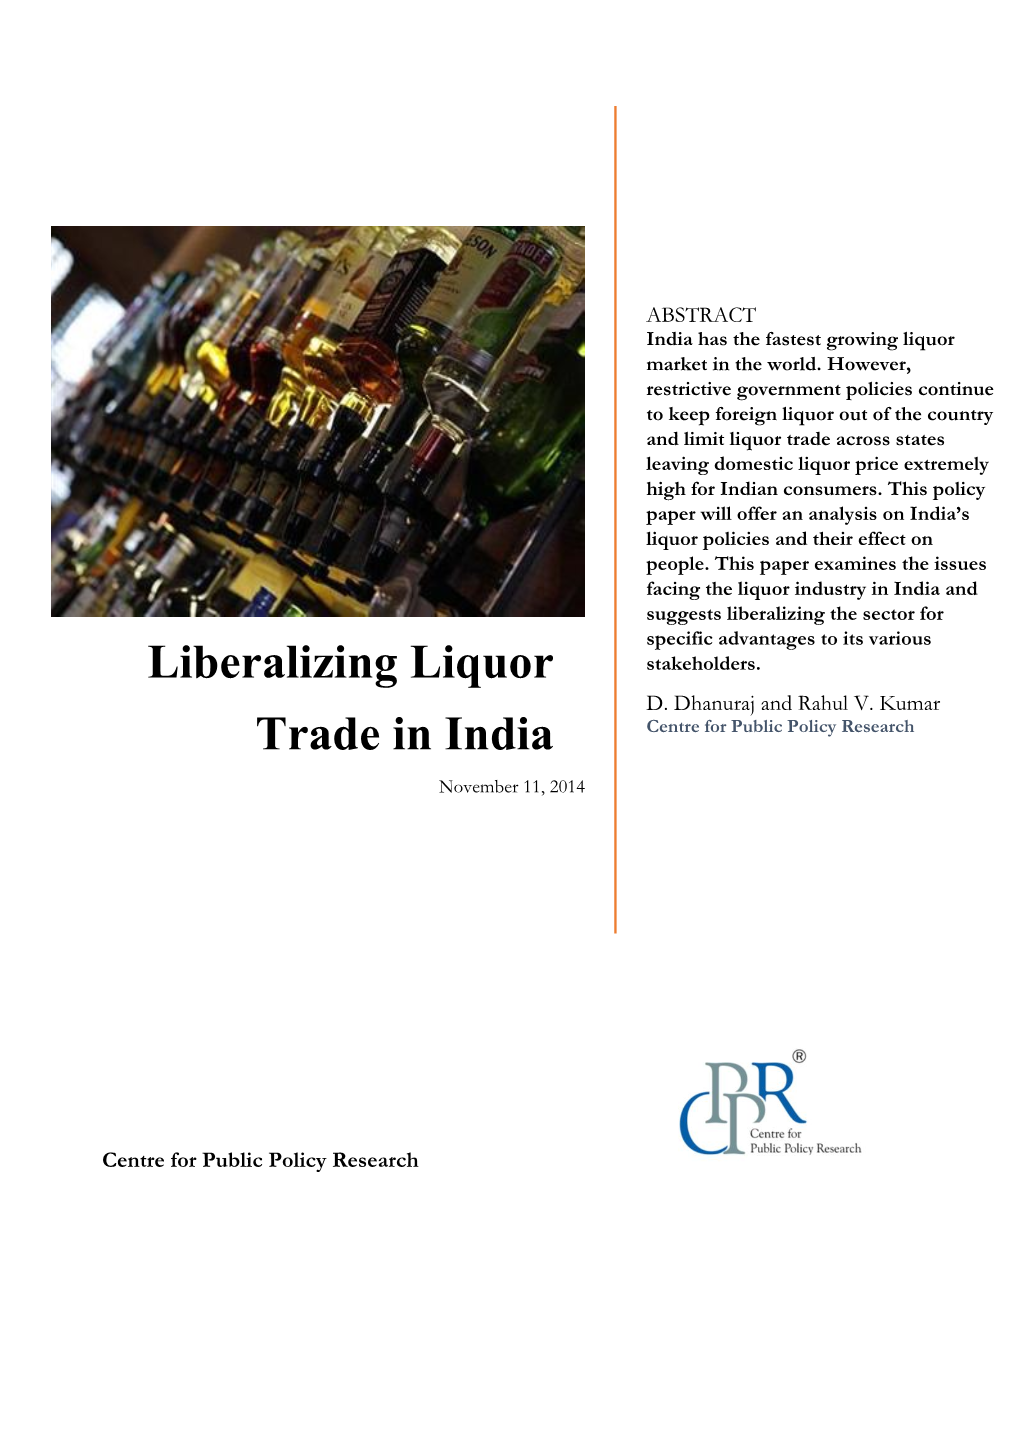 Report on Liberalizing Liquor Trade in India